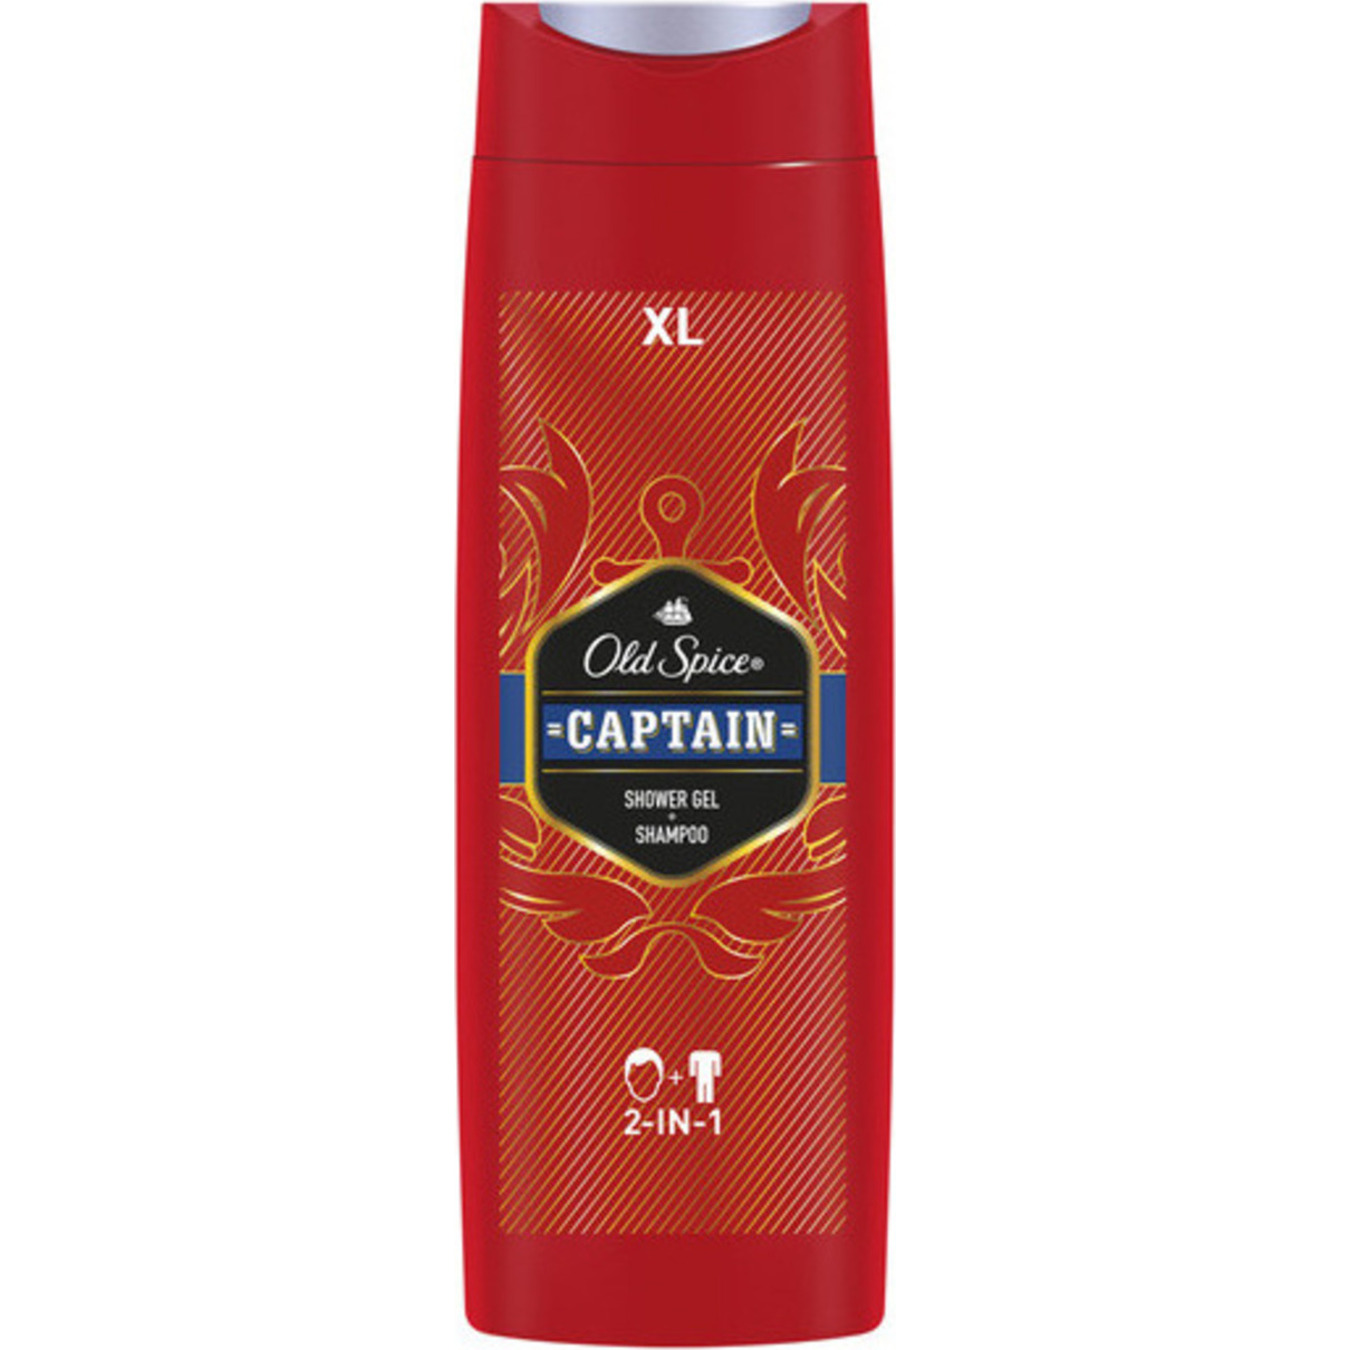 Old Spice Captain 2in1 Shower Gel + Shampoo 400ml